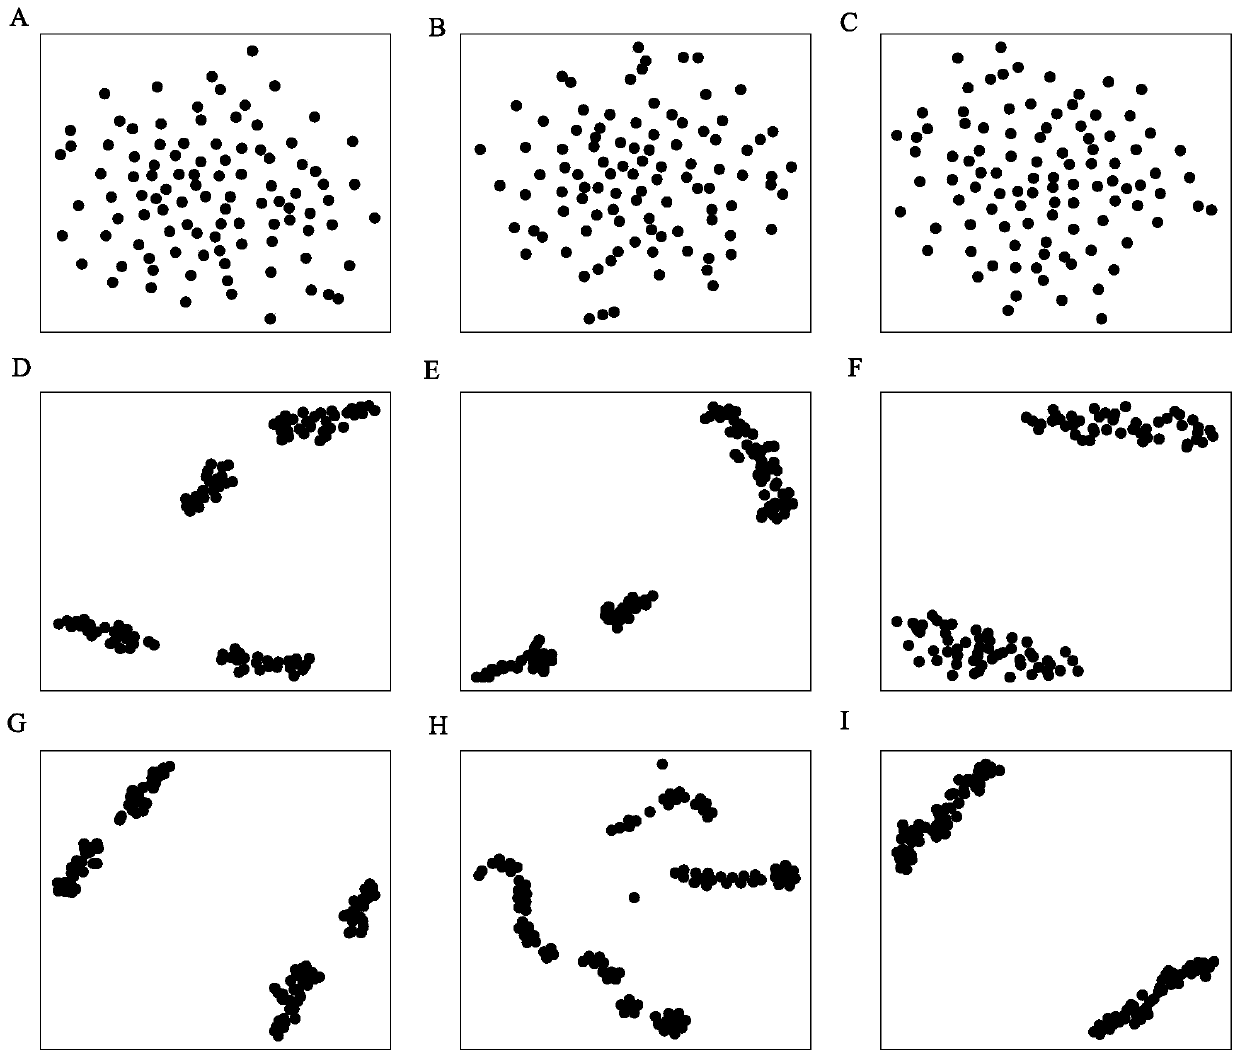 Protein lysine malonylation site prediction method based on deep learning